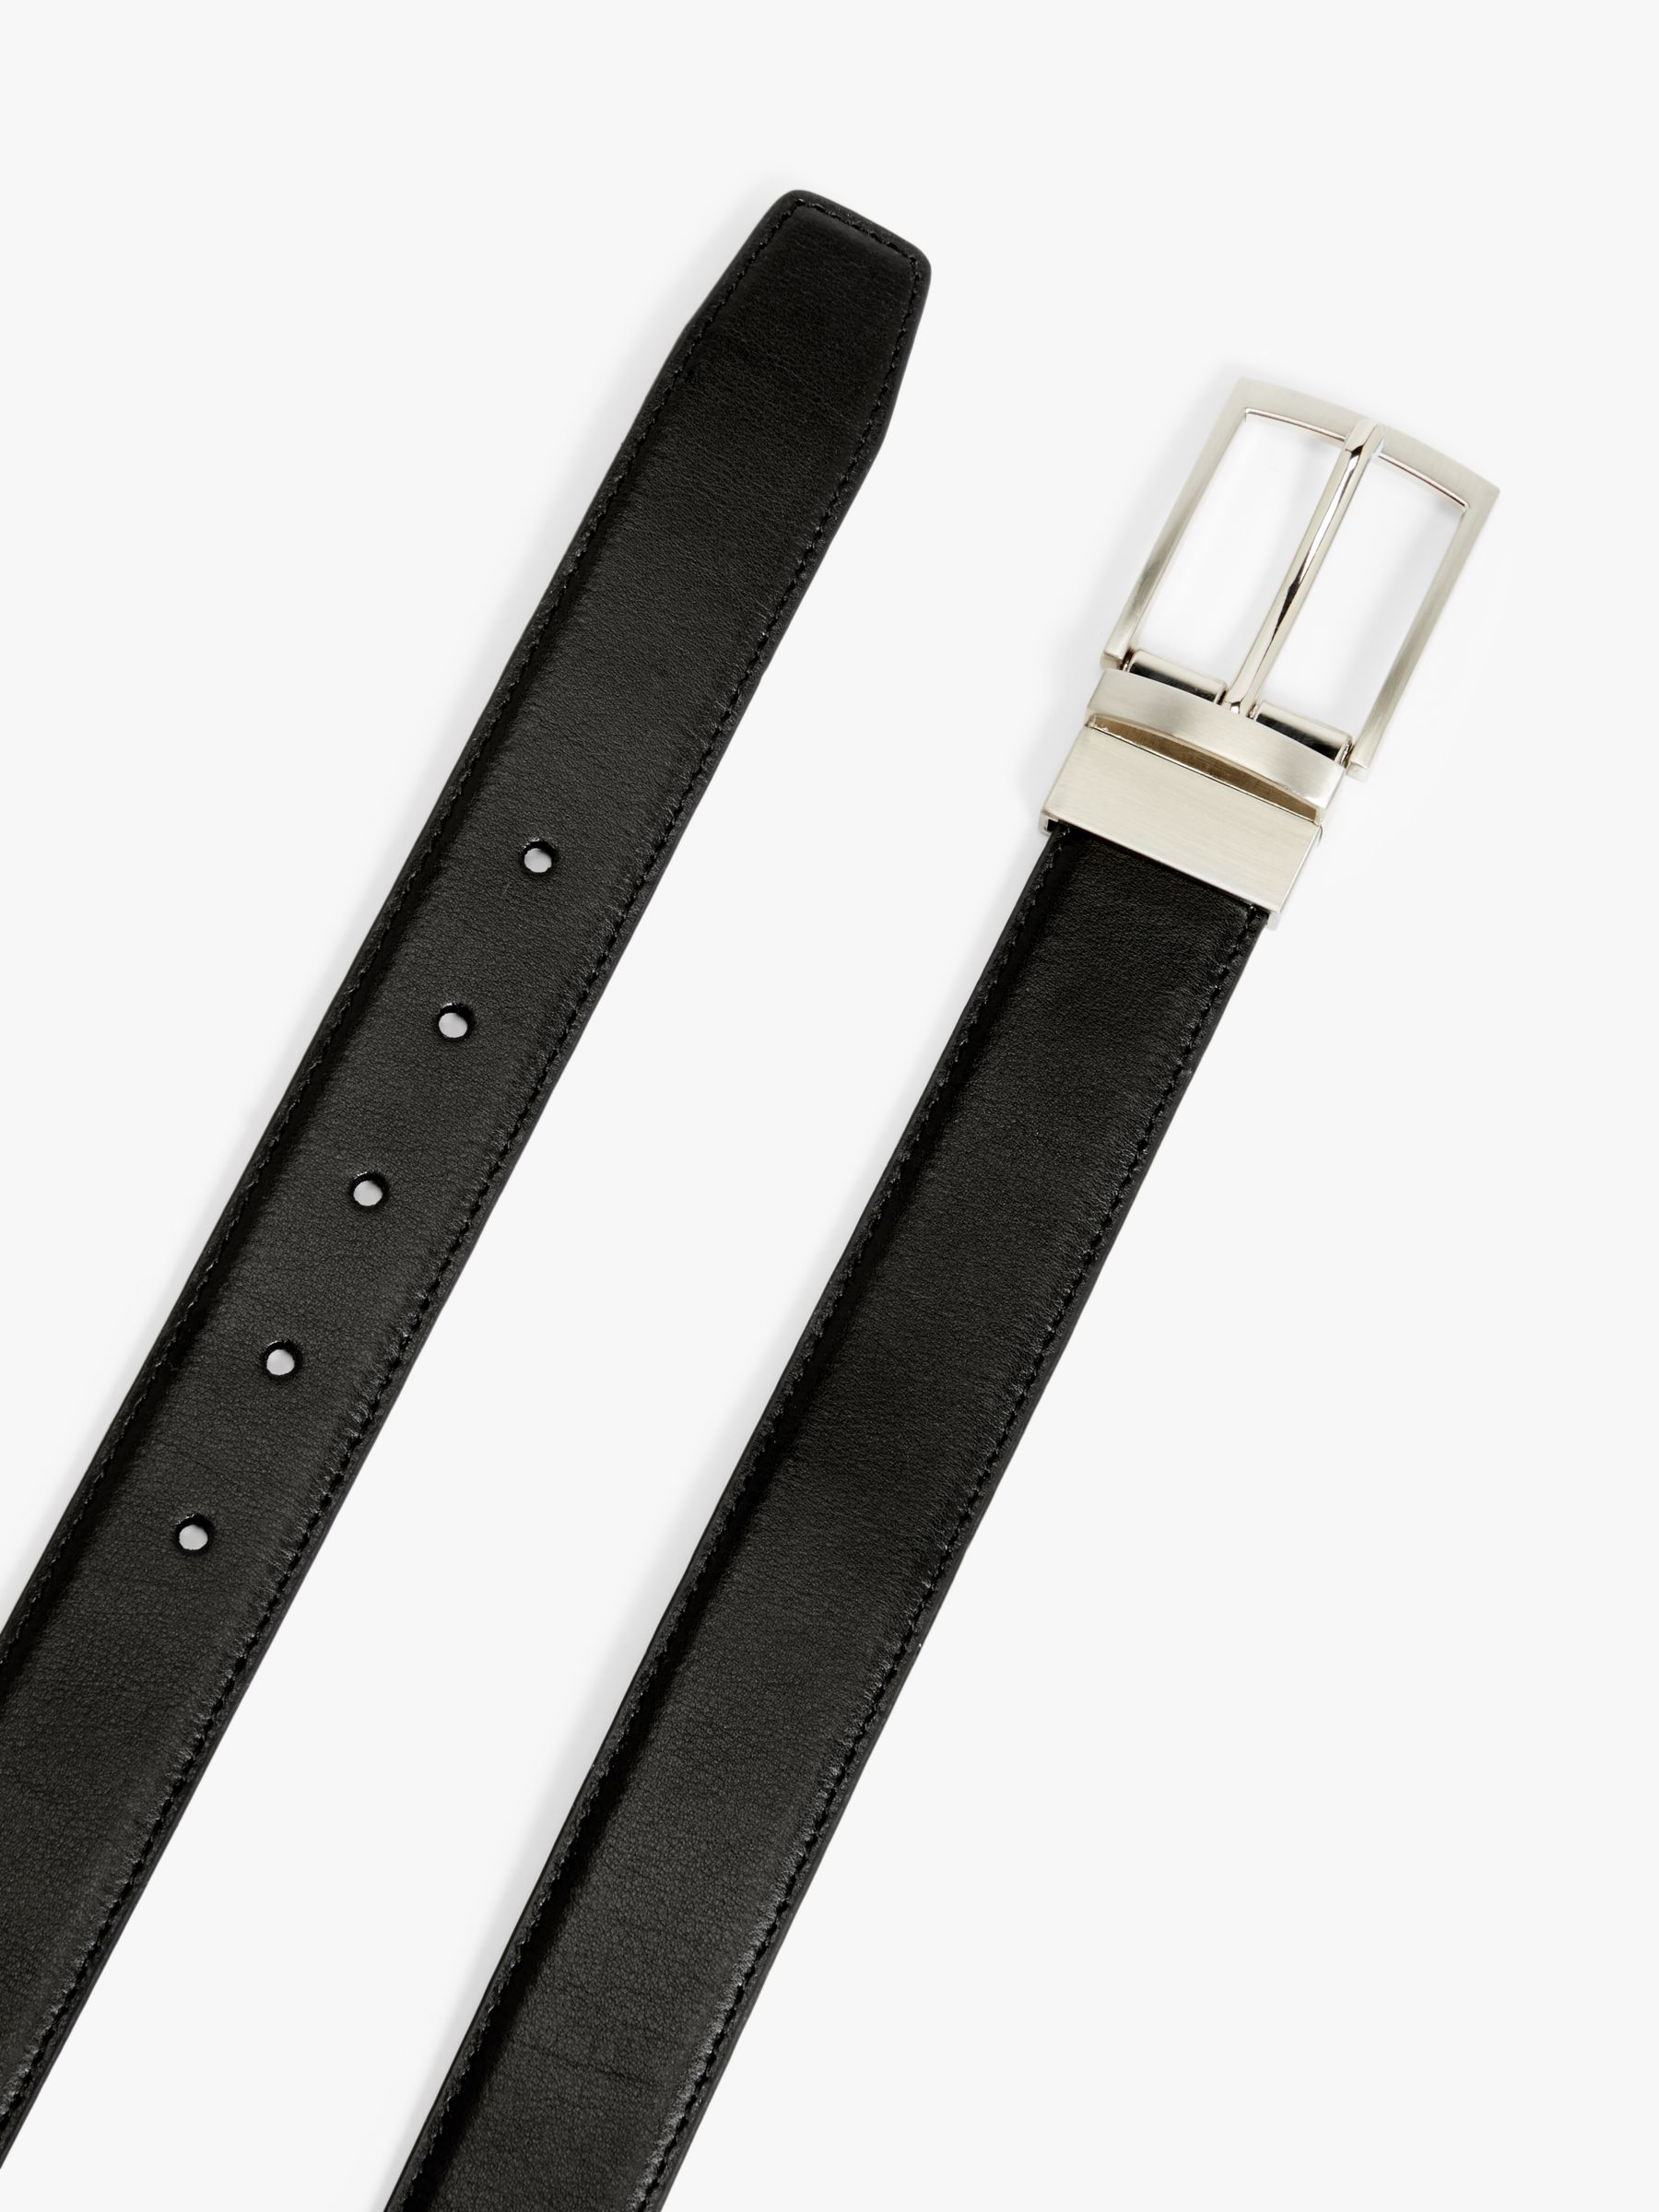 John Lewis 35mm Reversible Leather Belt, Black/Brown, S